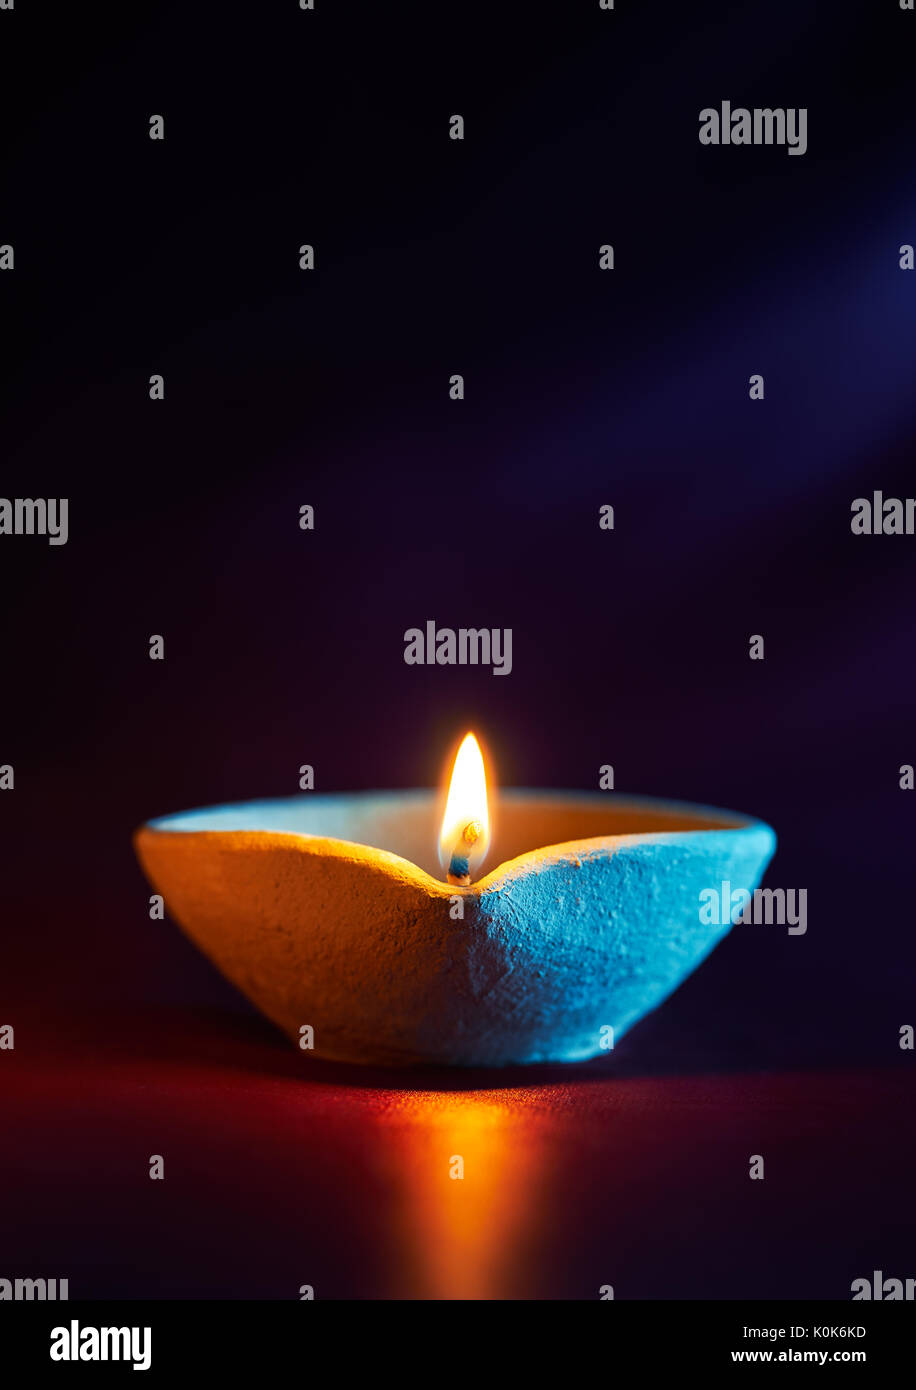 Traditionelle Ton diya Lampen leuchten bei Diwali Feier Stockfoto